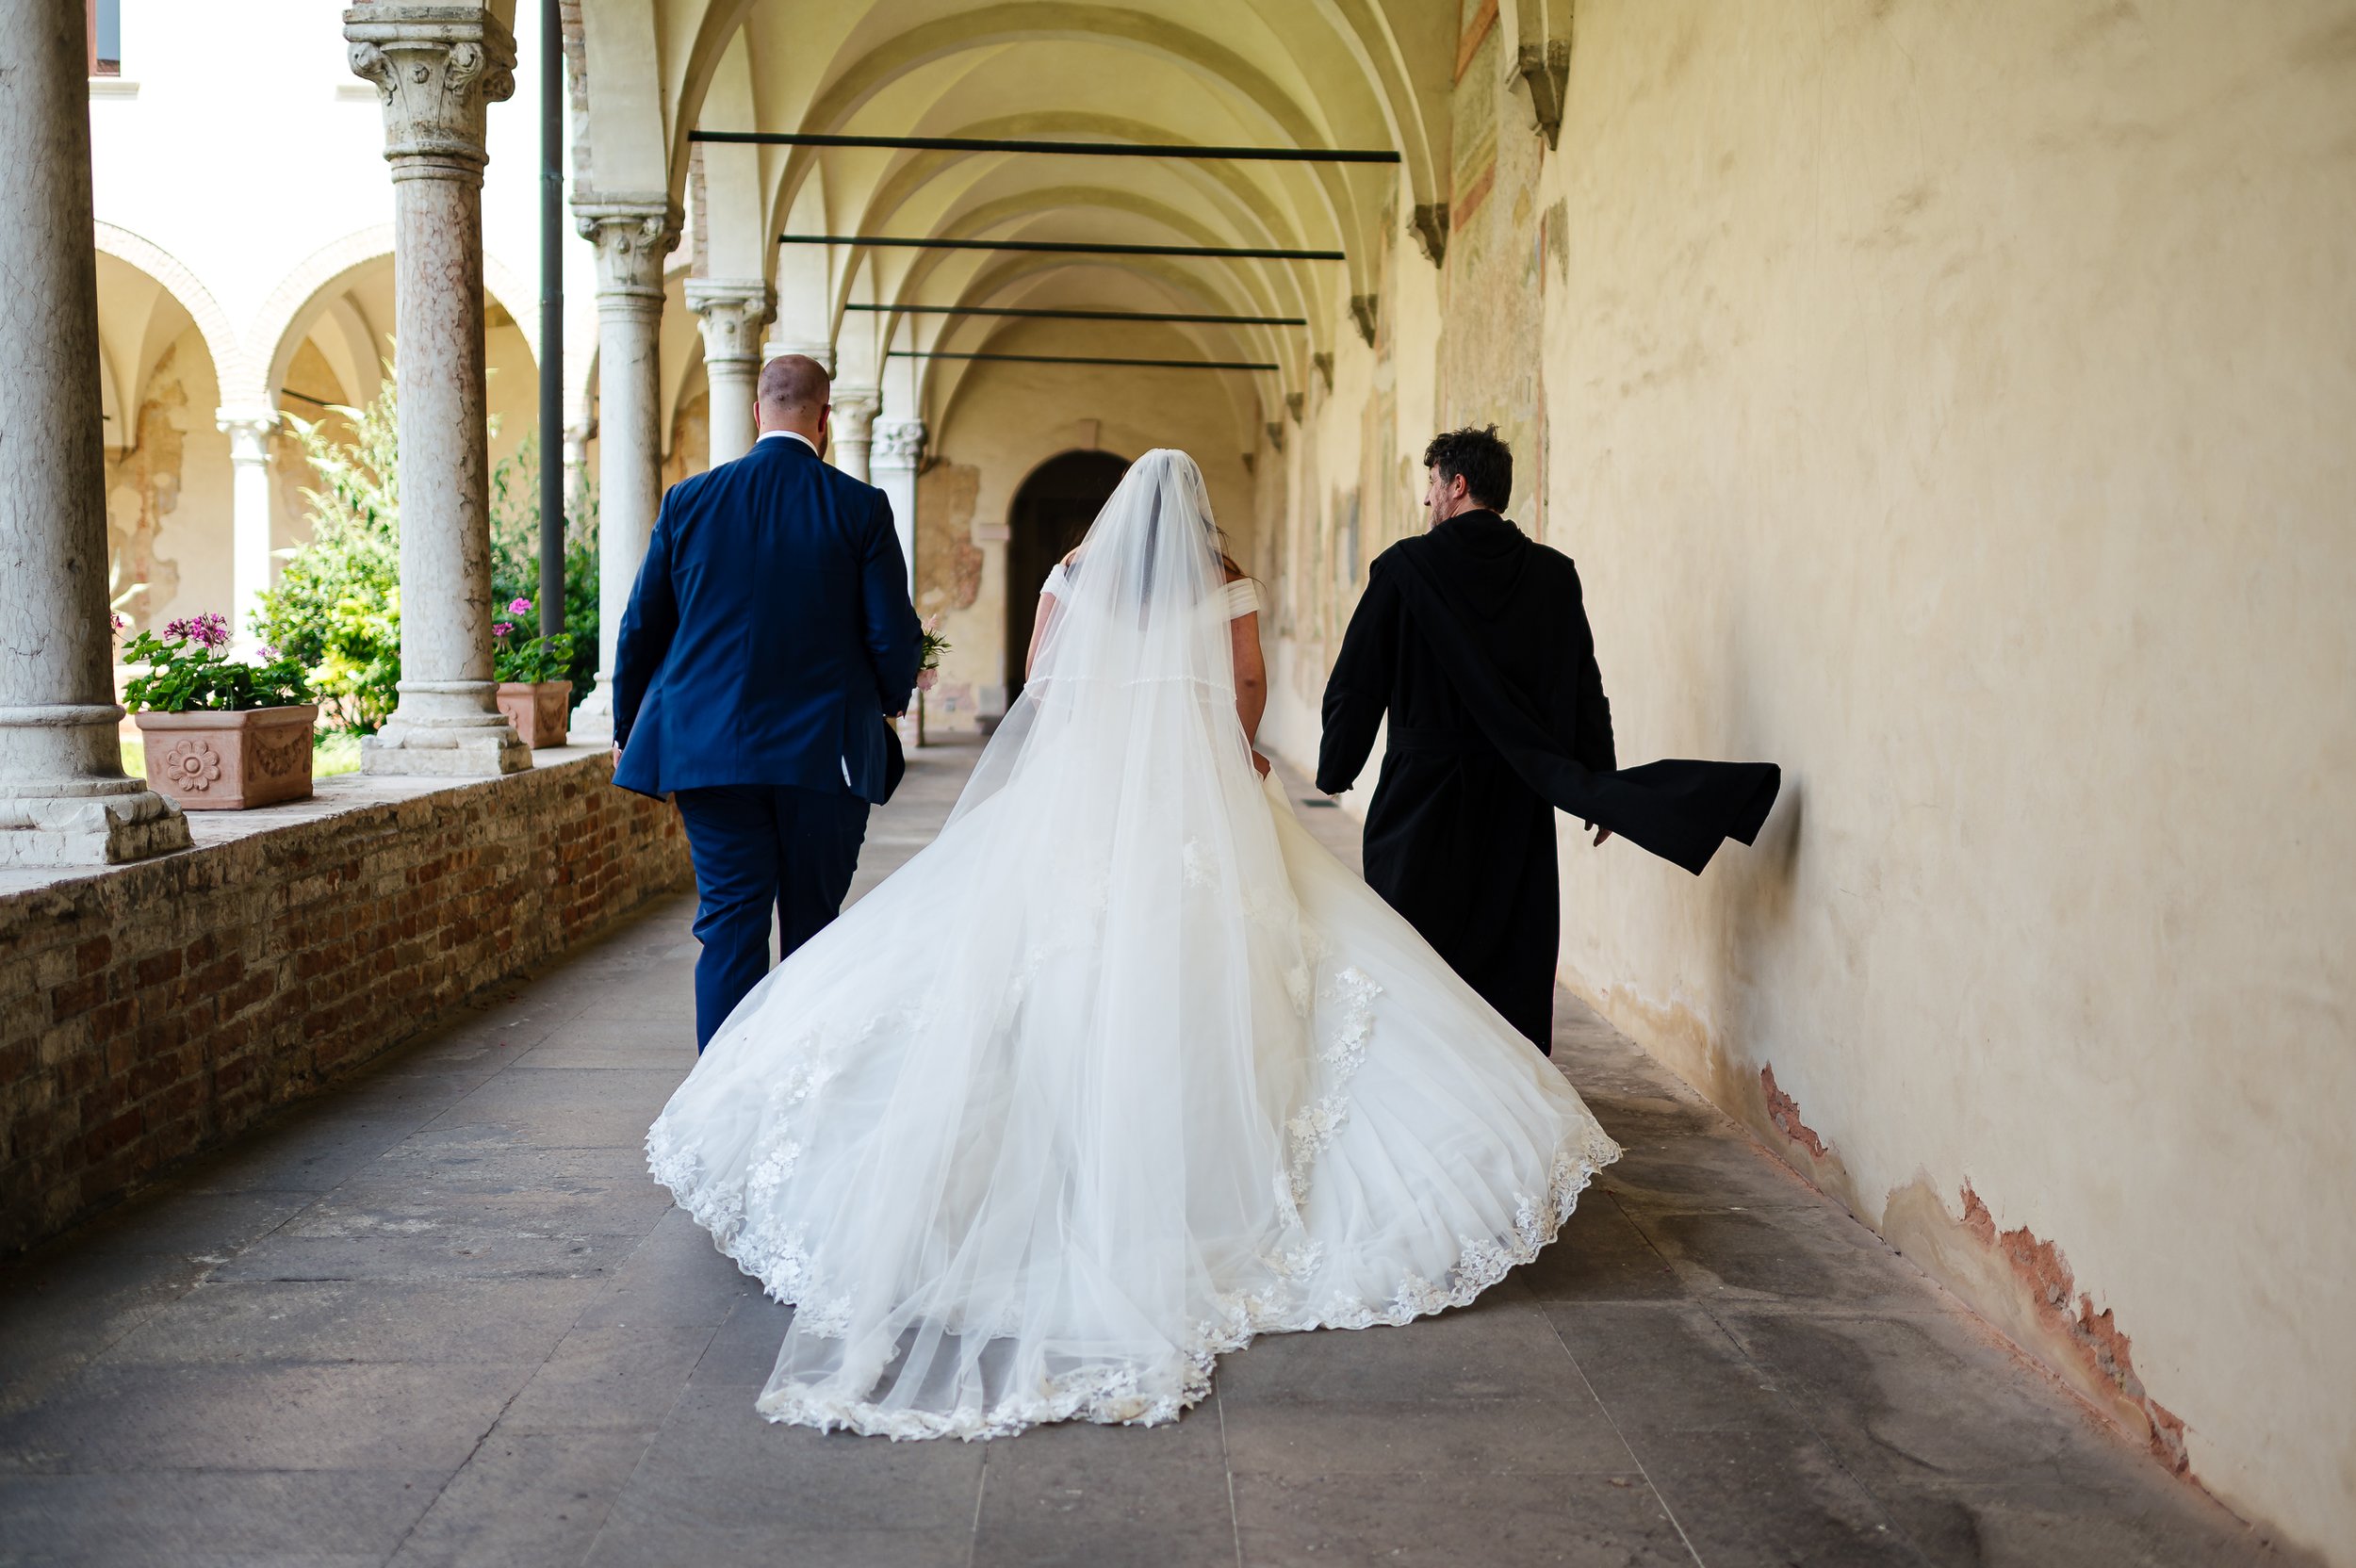 Matrimonio-dominio-bagnoli-Villa-Widman-Borletti-0062.jpg